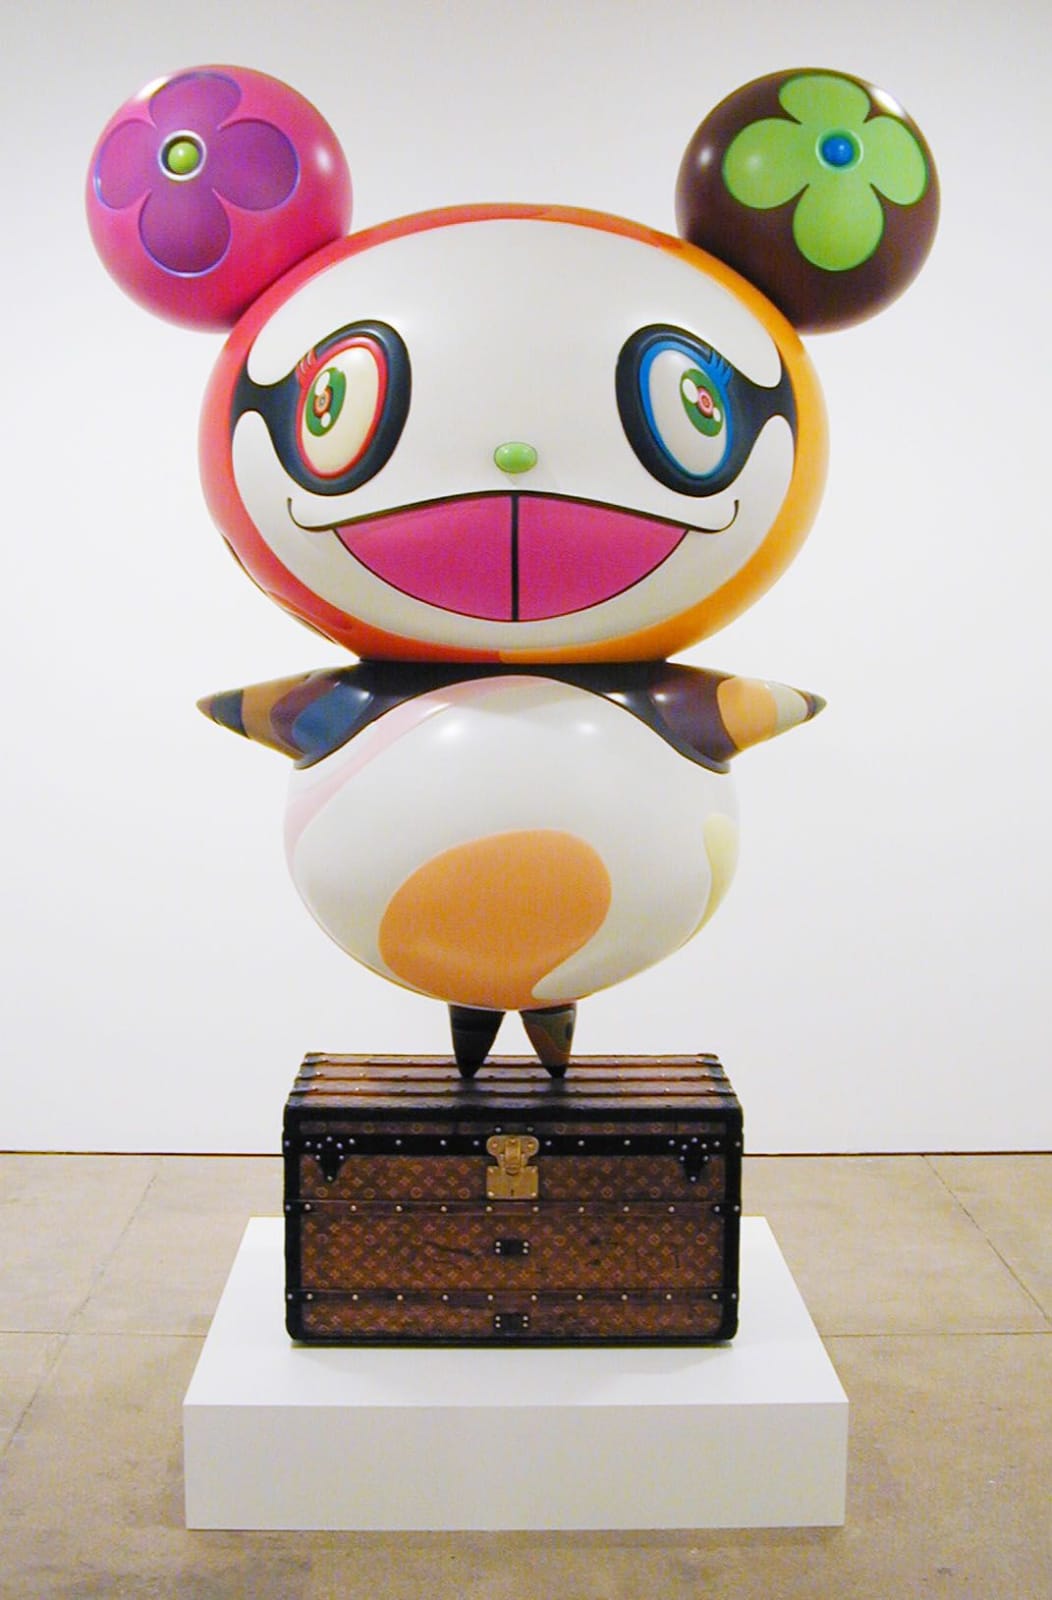 Takashi Murakami, Panda, 2003